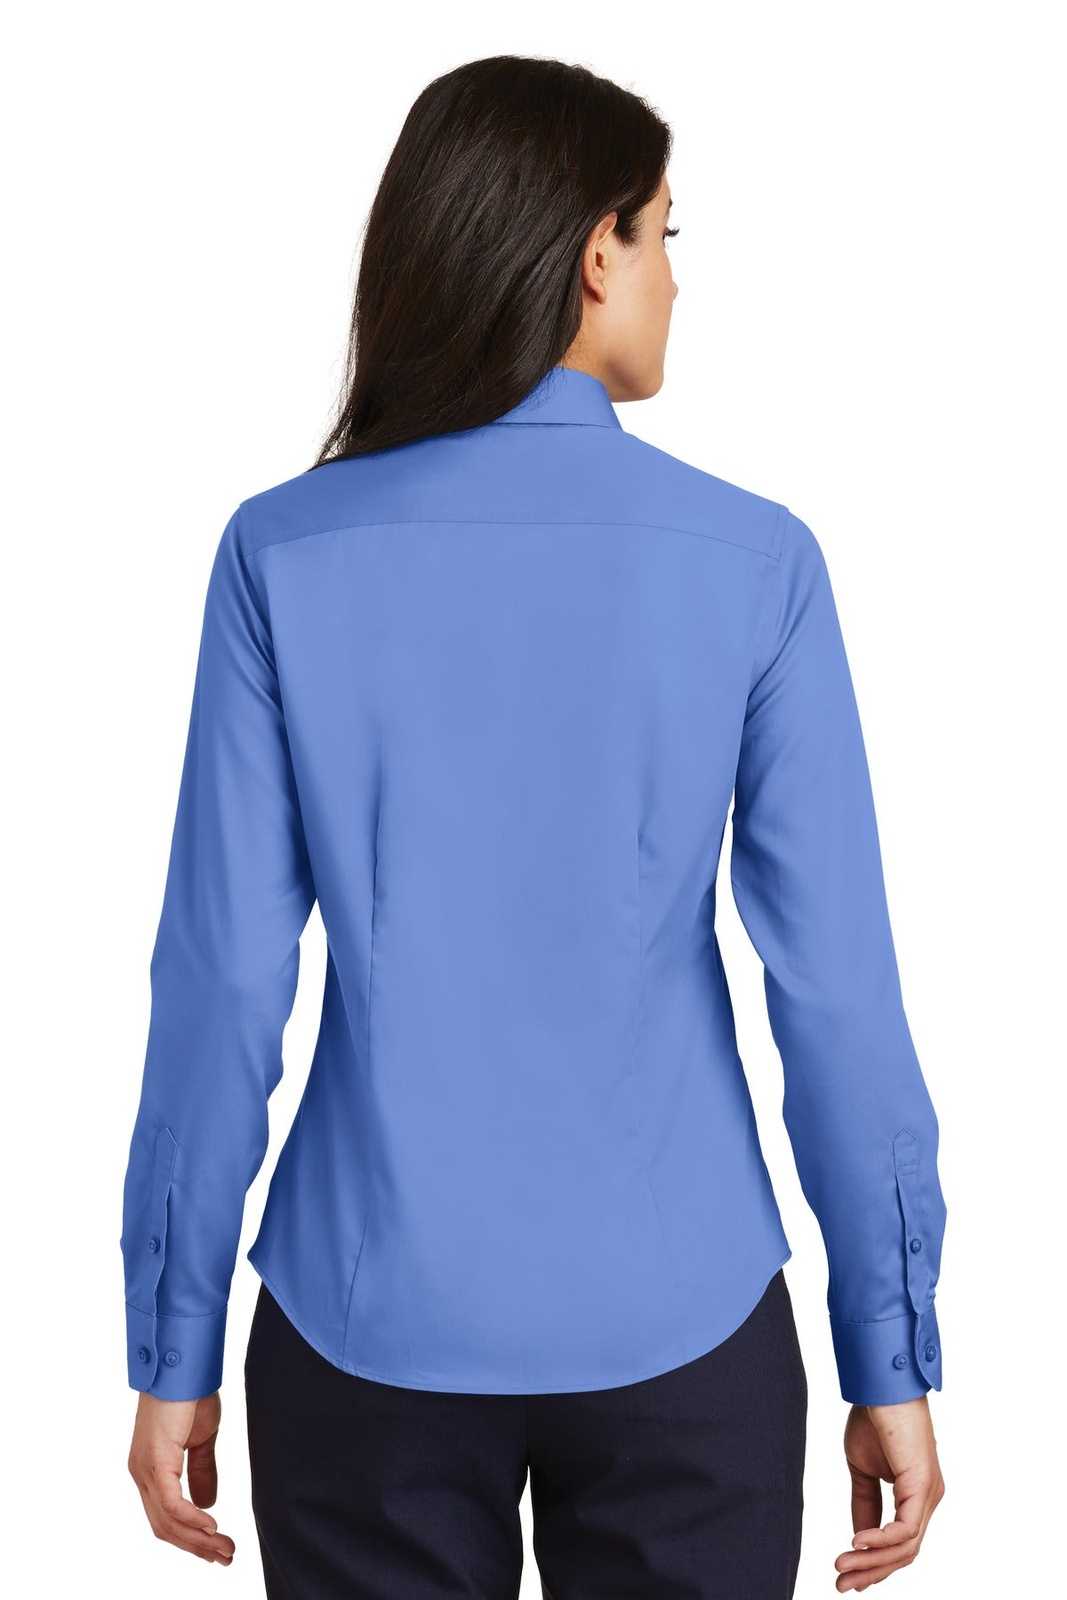 Port Authority L638 Ladies Non-Iron Twill Shirt - Ultramarine Blue - HIT a Double - 2